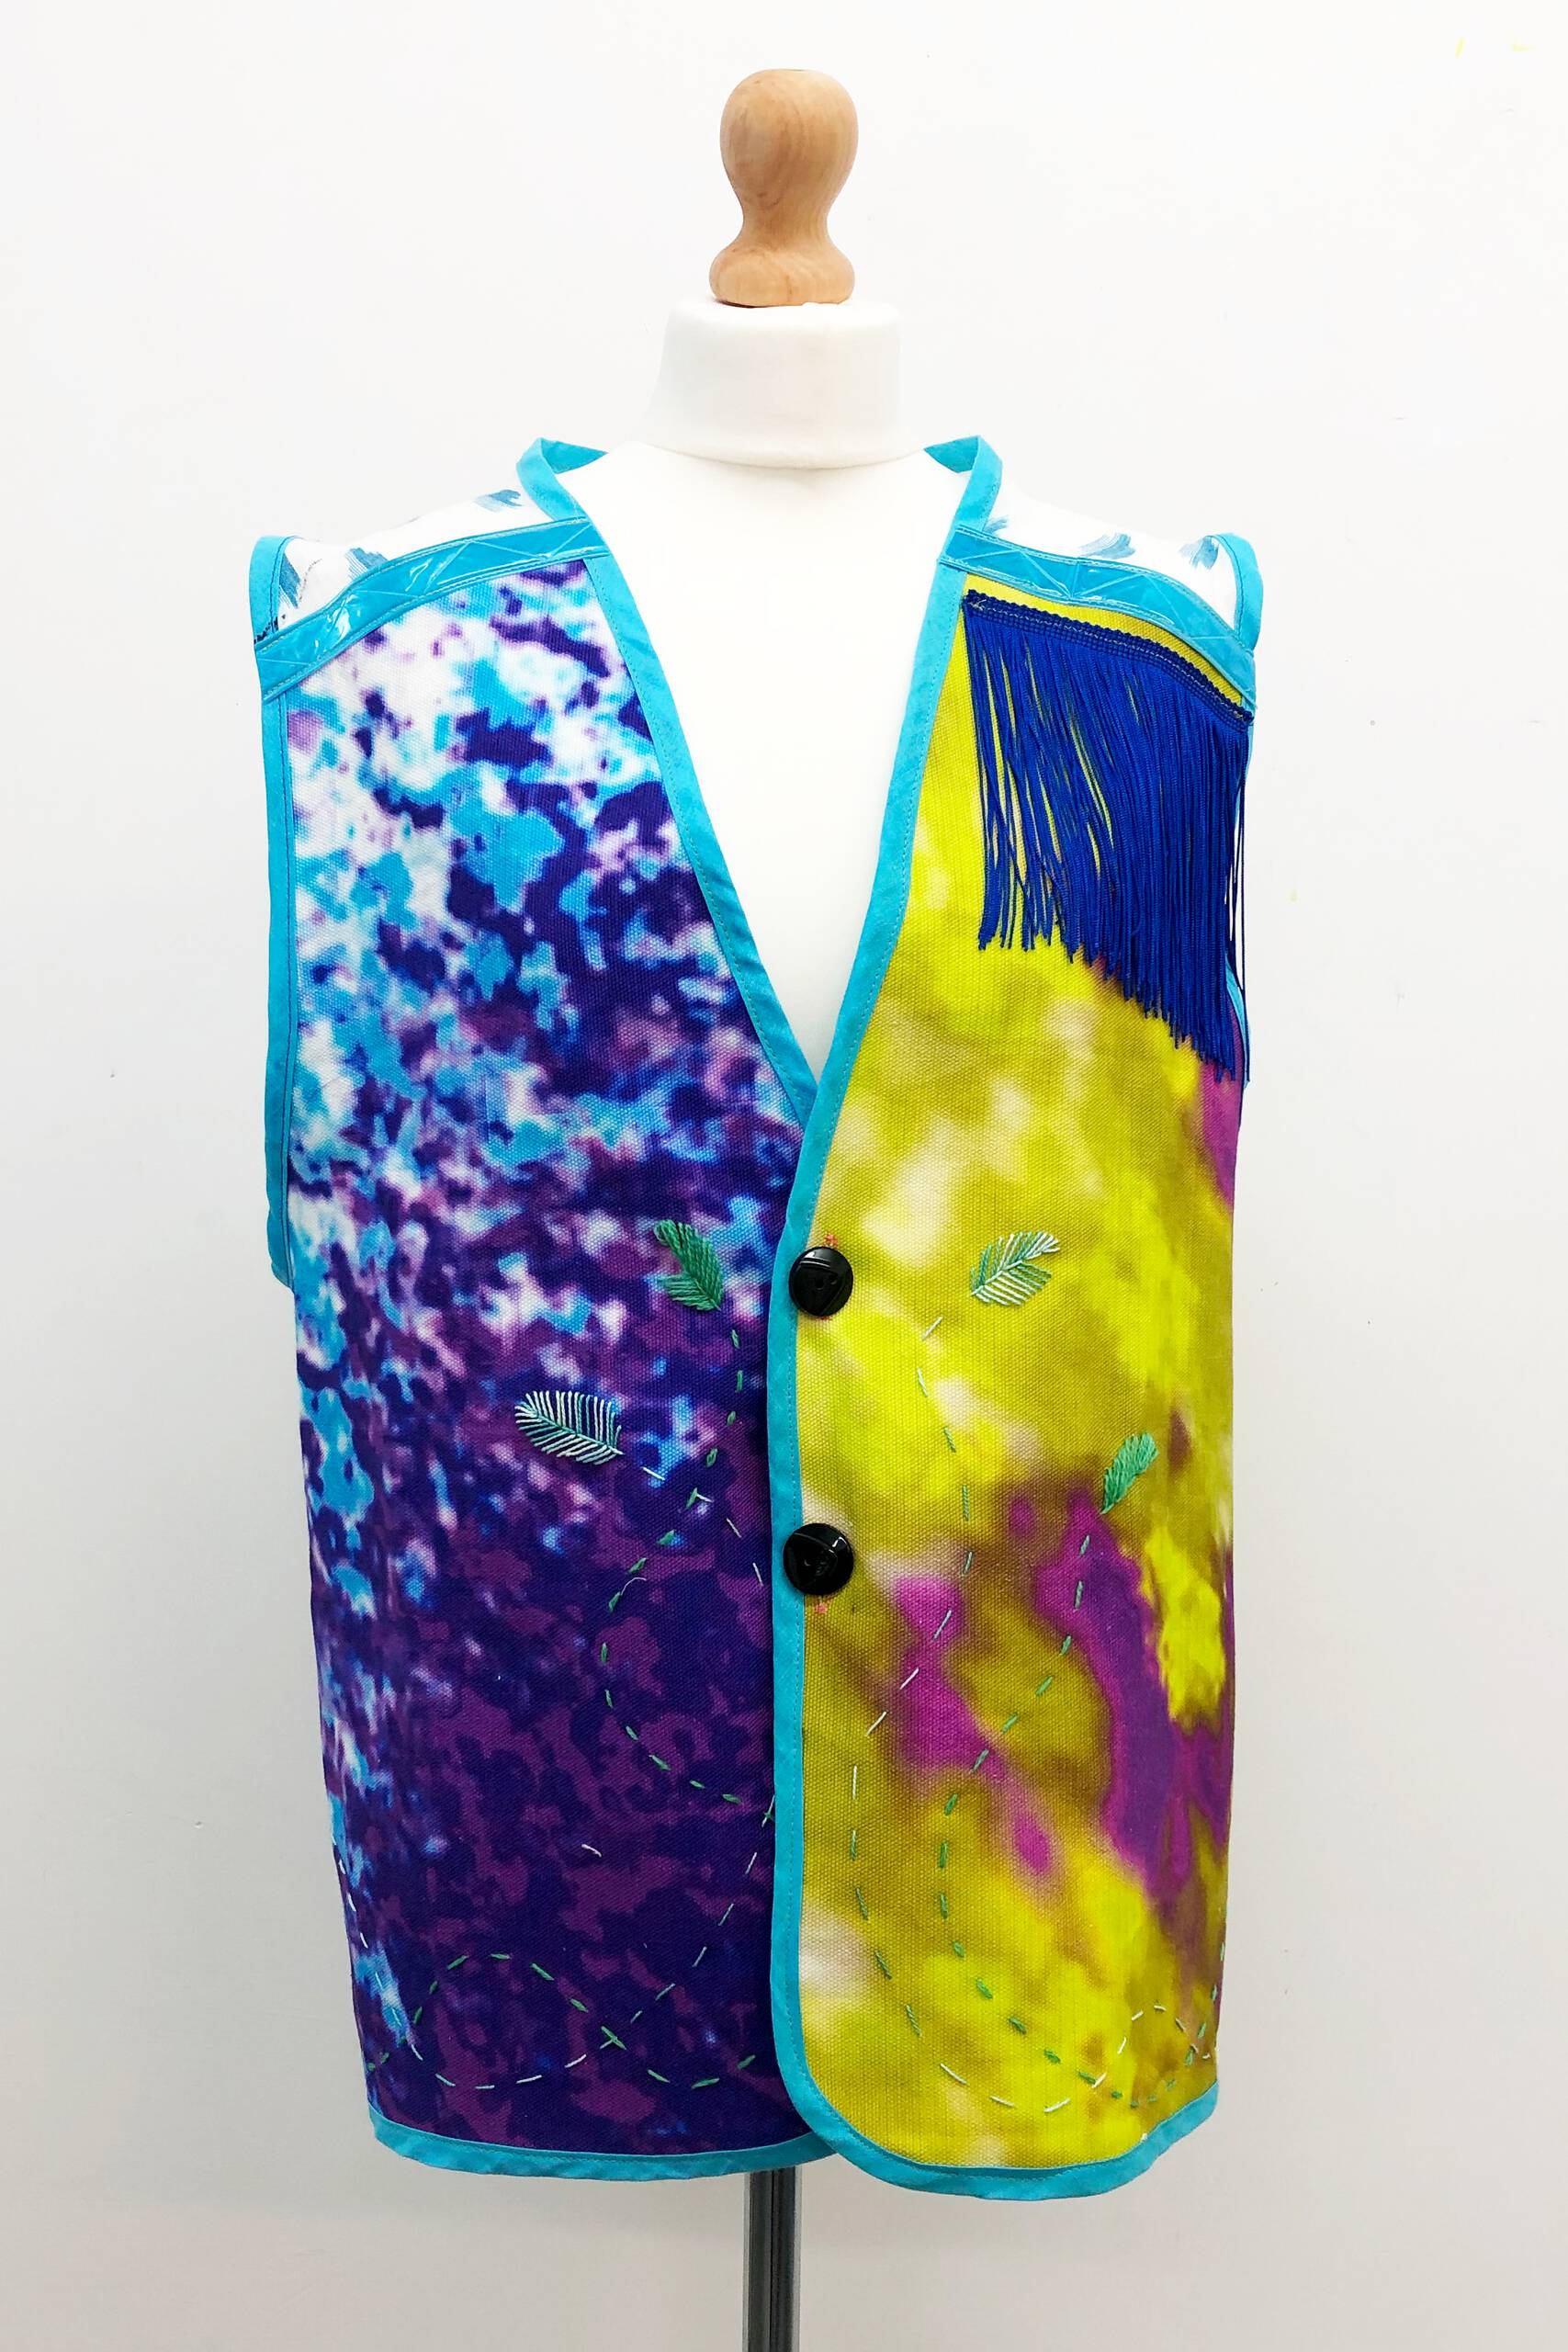 Fruits of Origin [biriba] (collaboration with Goia Mujalli), Fabric, acrylic paint, hand-embroidery on hand-sewn garment, 2019